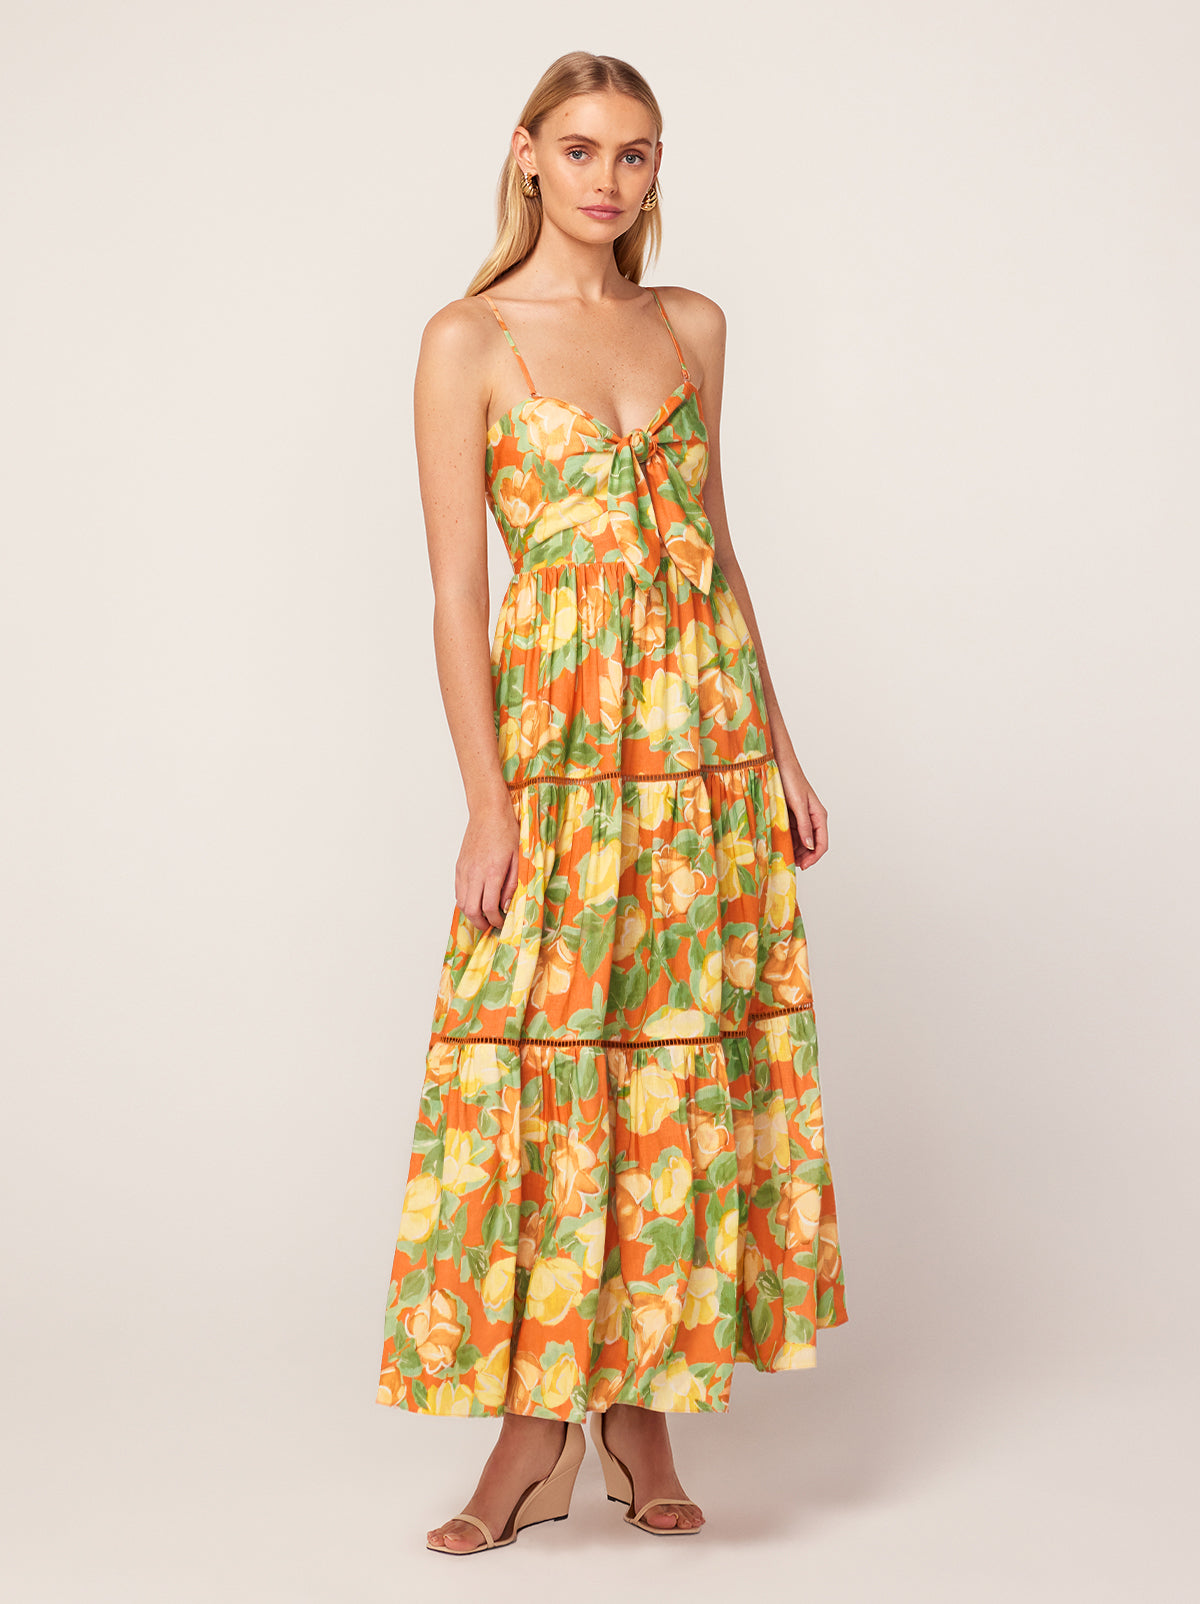 Immy Apricot Painted Floral Print Midi Dress By KITRI Studio